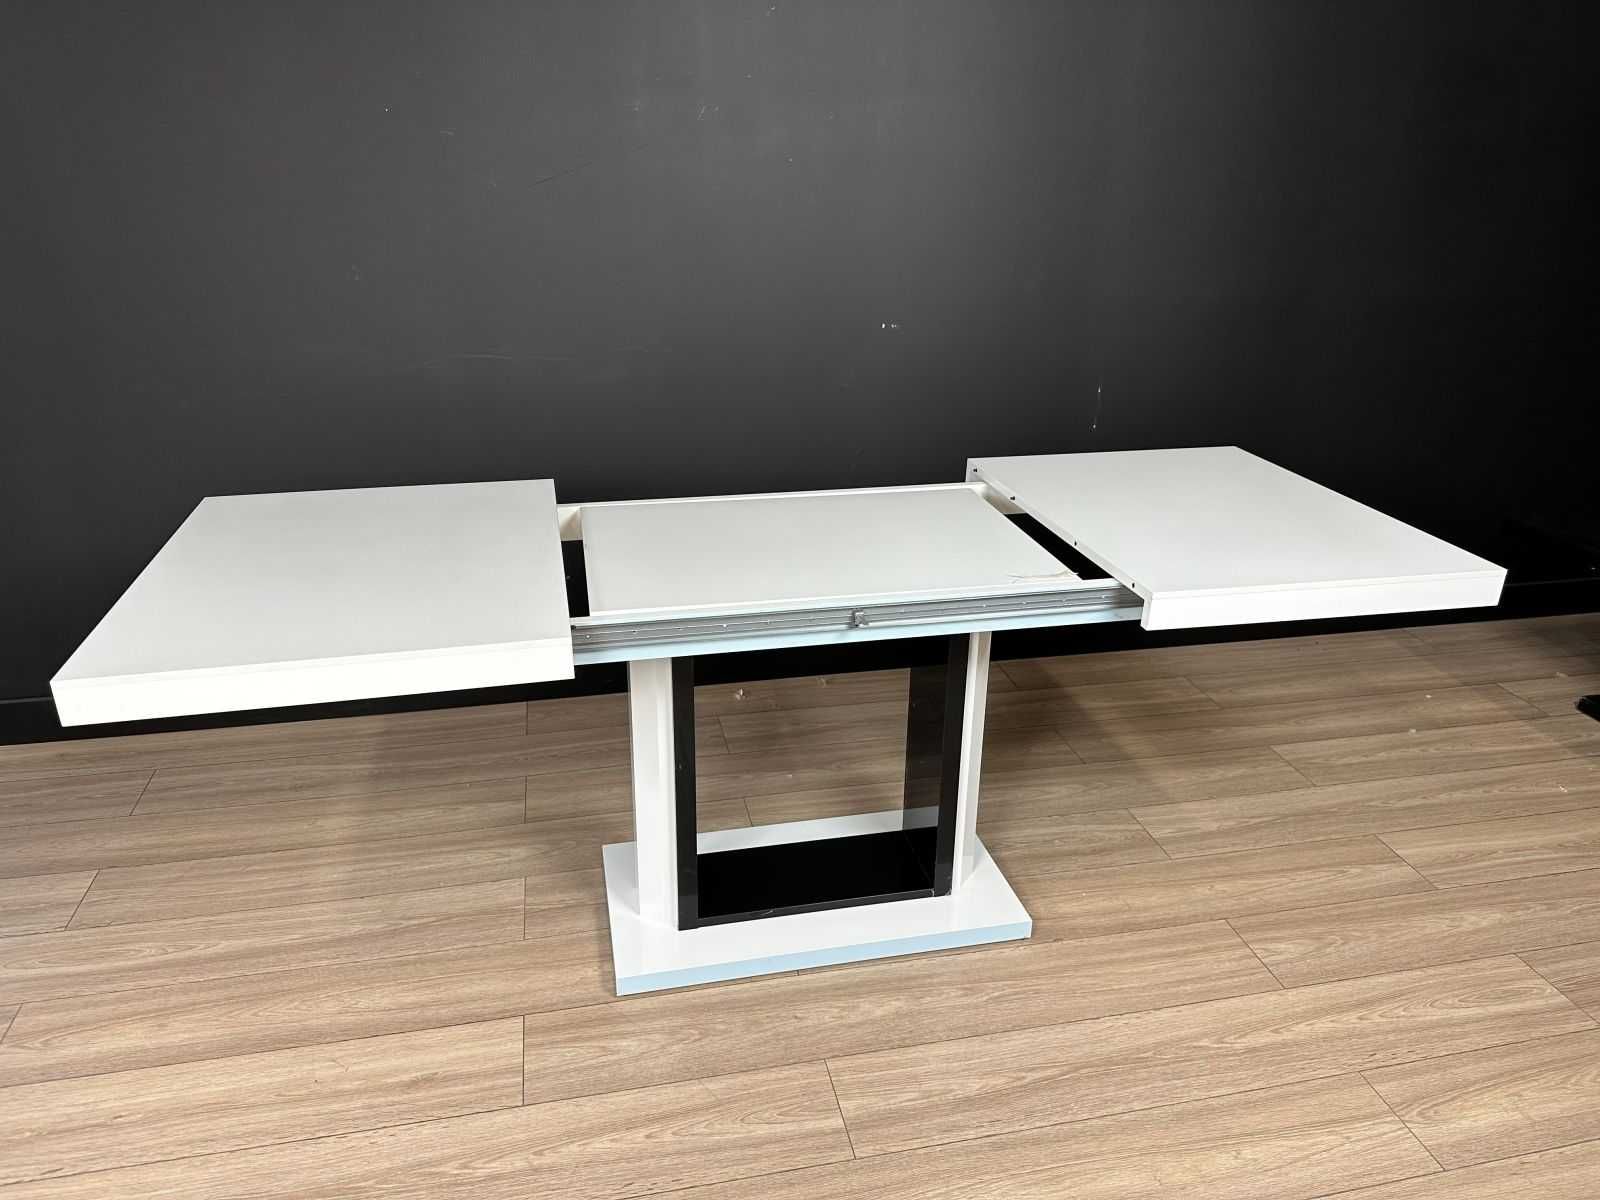 Stół rozkładany Quadro 120 model Q (outlet)